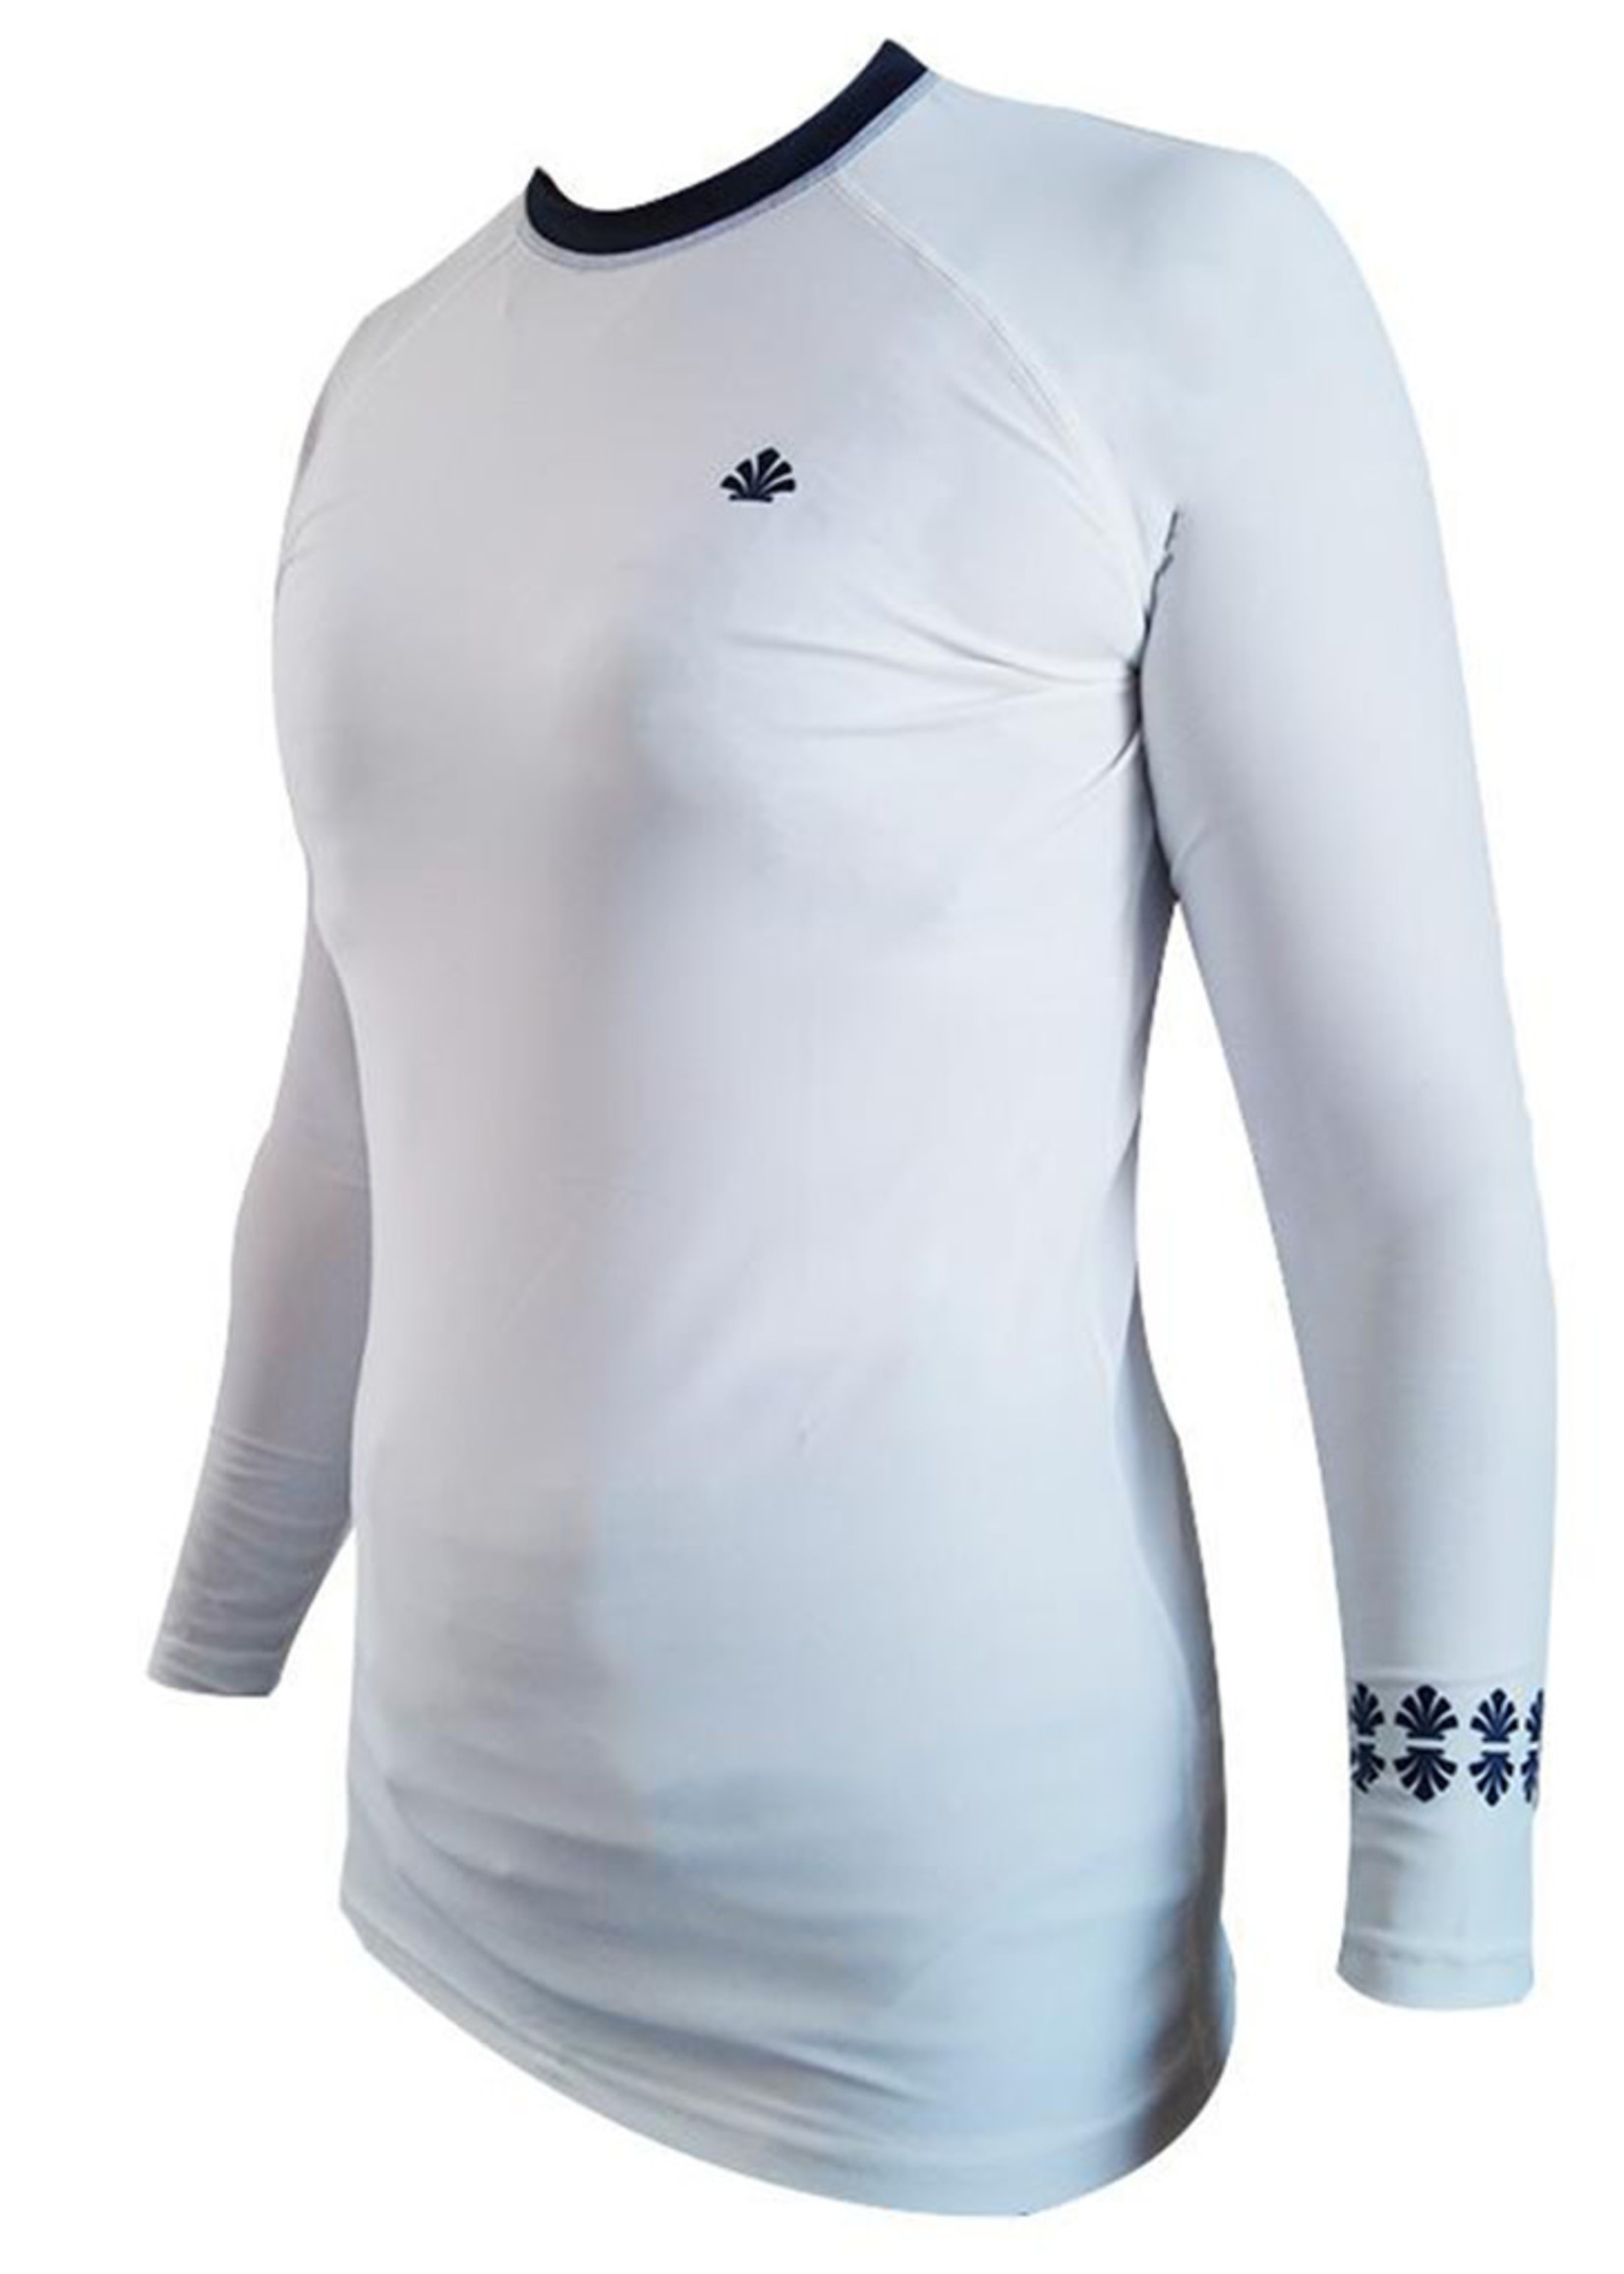 Saint Jacques Lycra Long Sleeves White Shirt UV Protection - Women